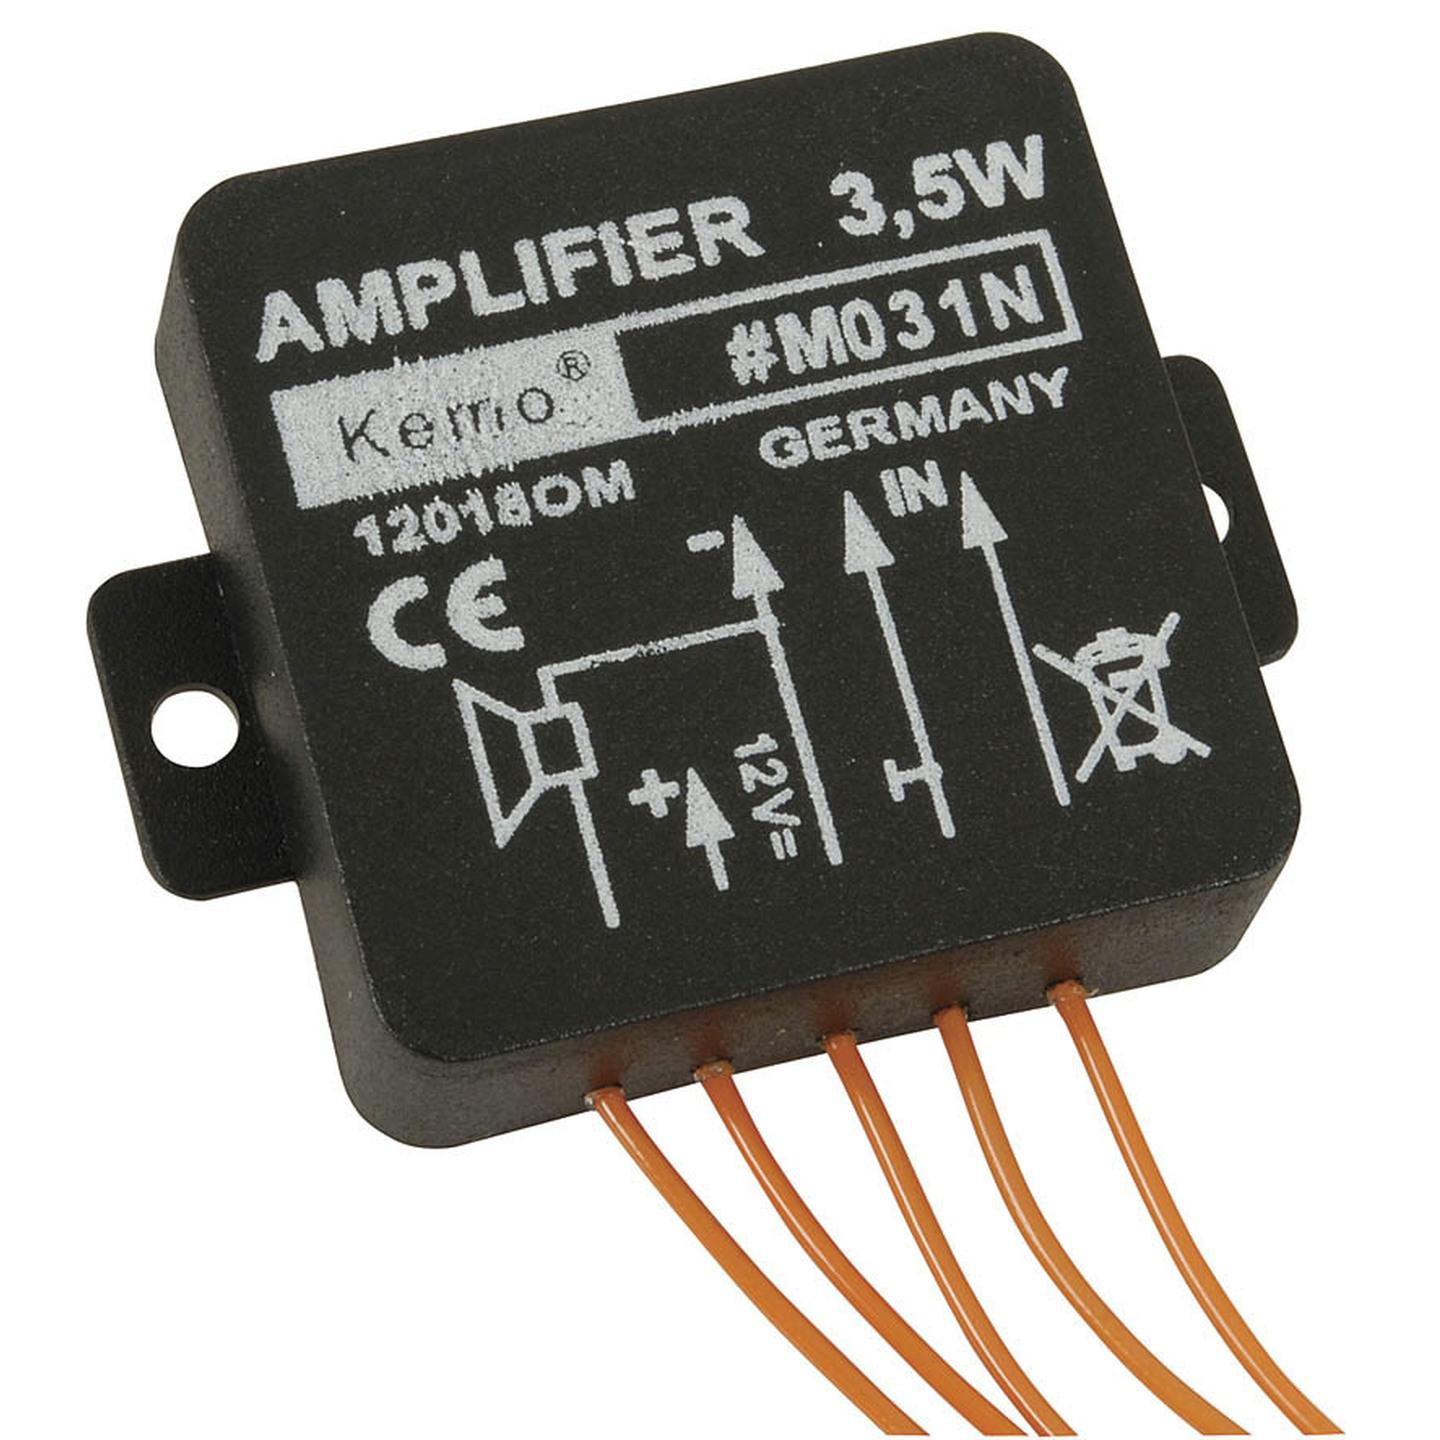 Universal Amp 3.5W Module M031 - 1 Channel